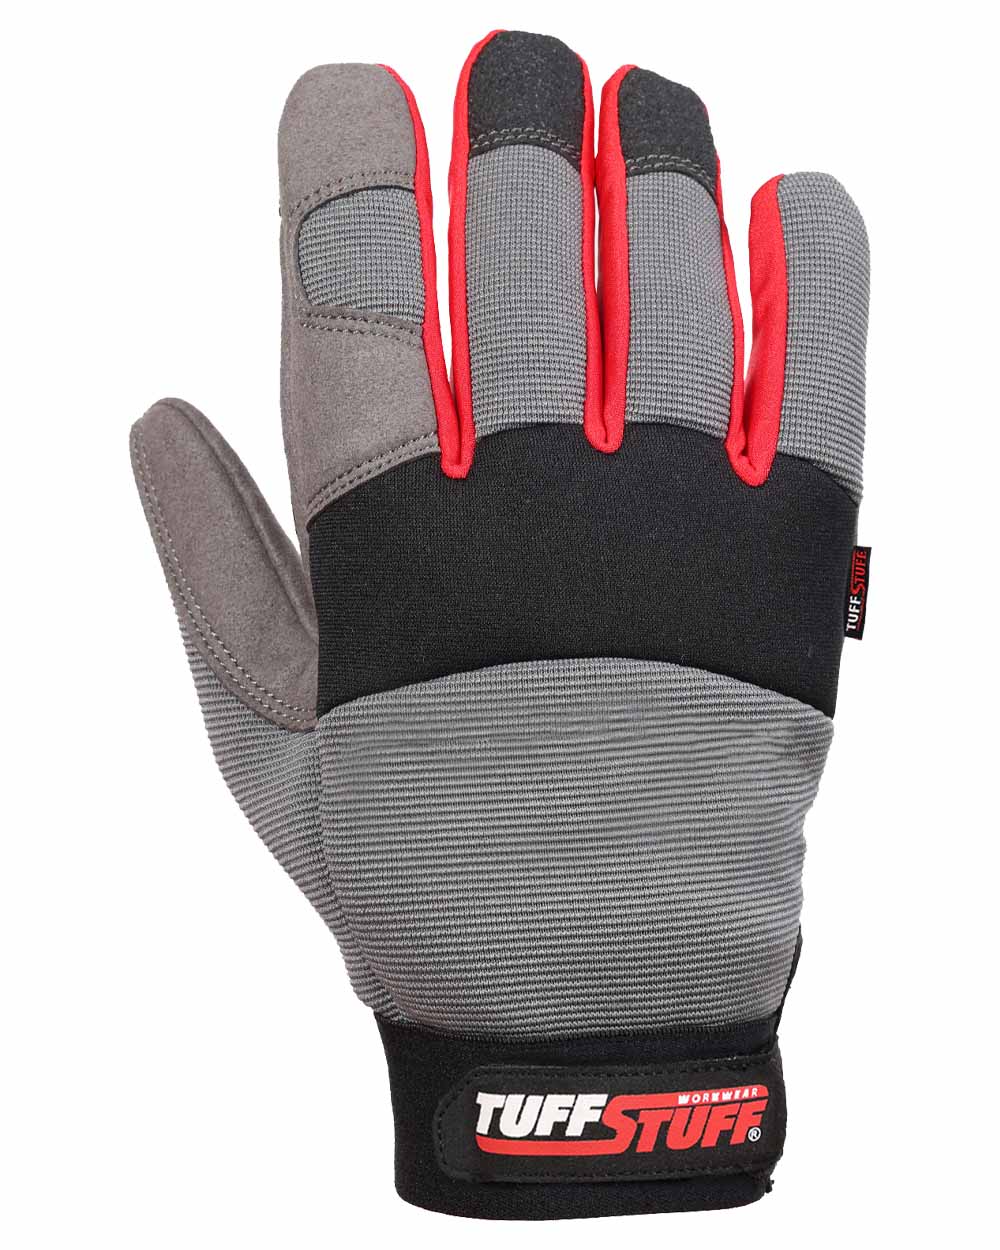 Black coloured TuffStuff Pro Work Gloves on White Background